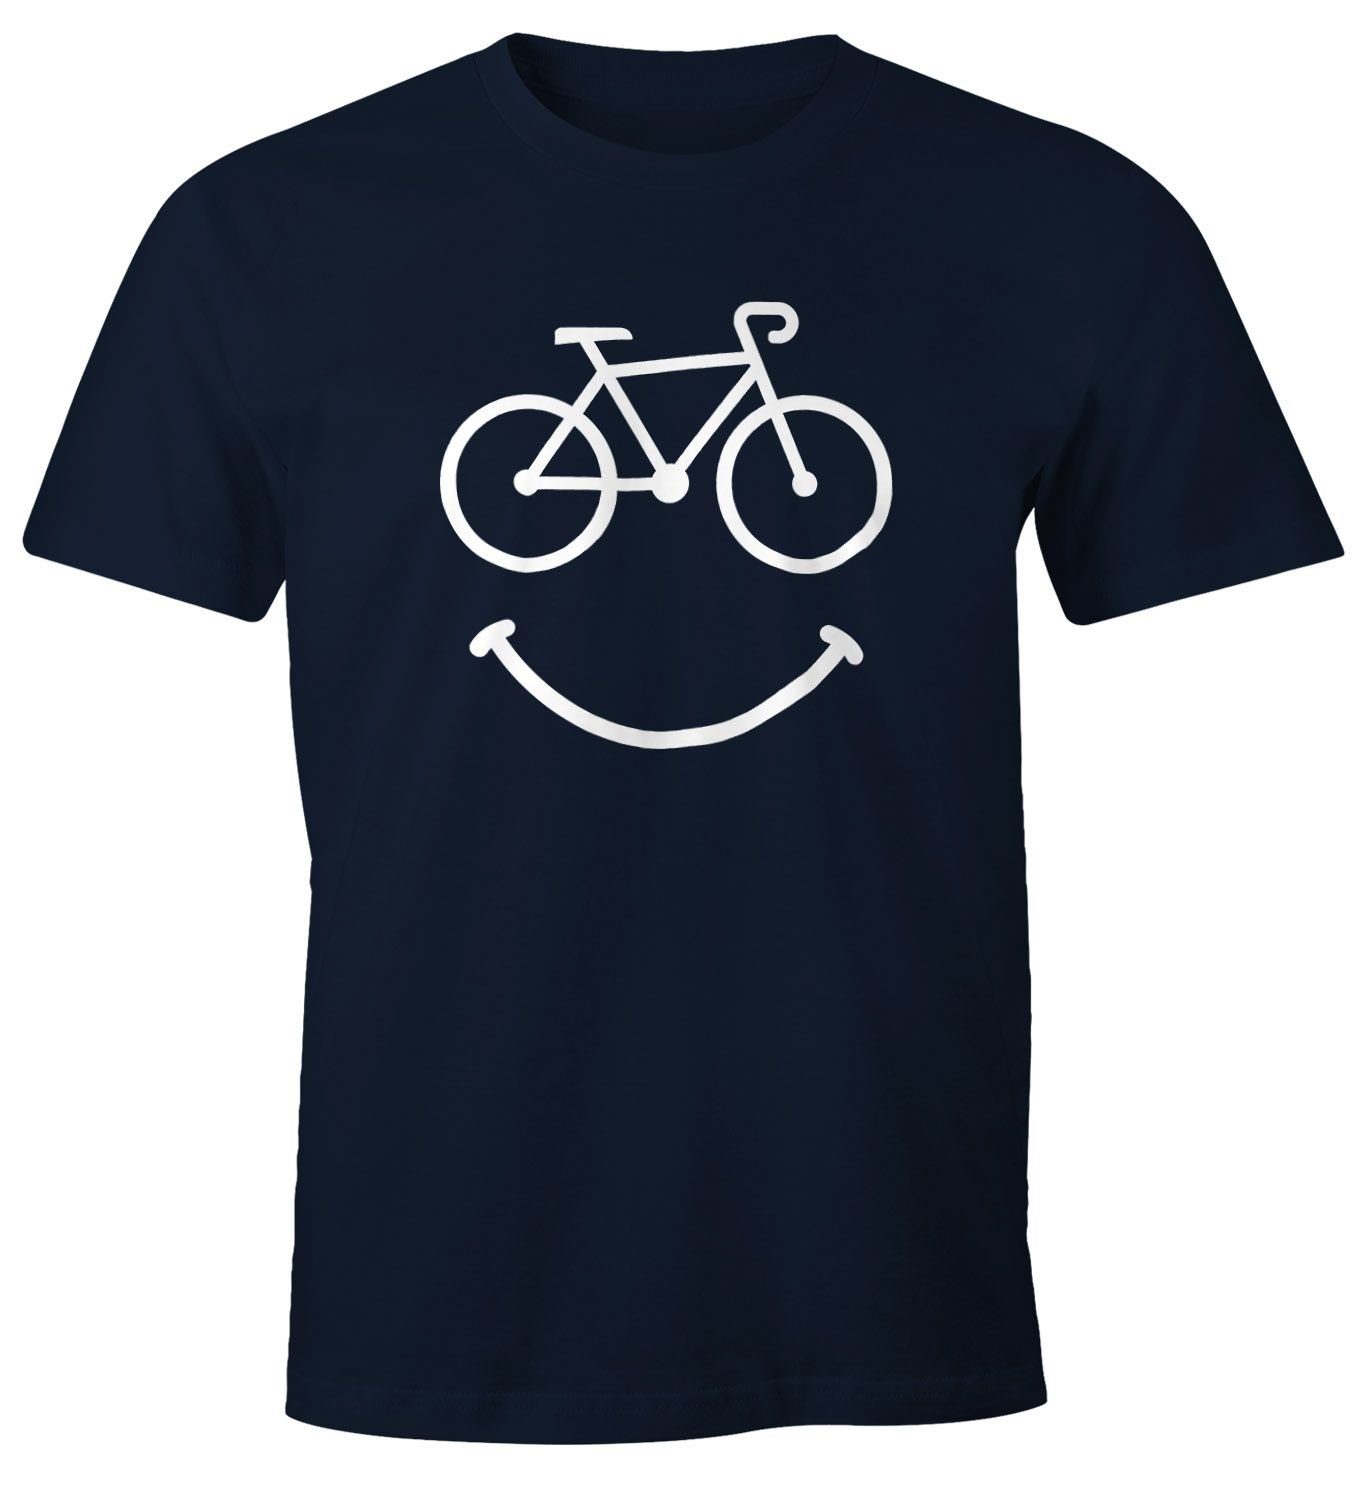 MoonWorks Print-Shirt Fahrrad Herren Bike mit T-Shirt Happy Radfahren Moonworks® Fun-Shirt Print Smile navy